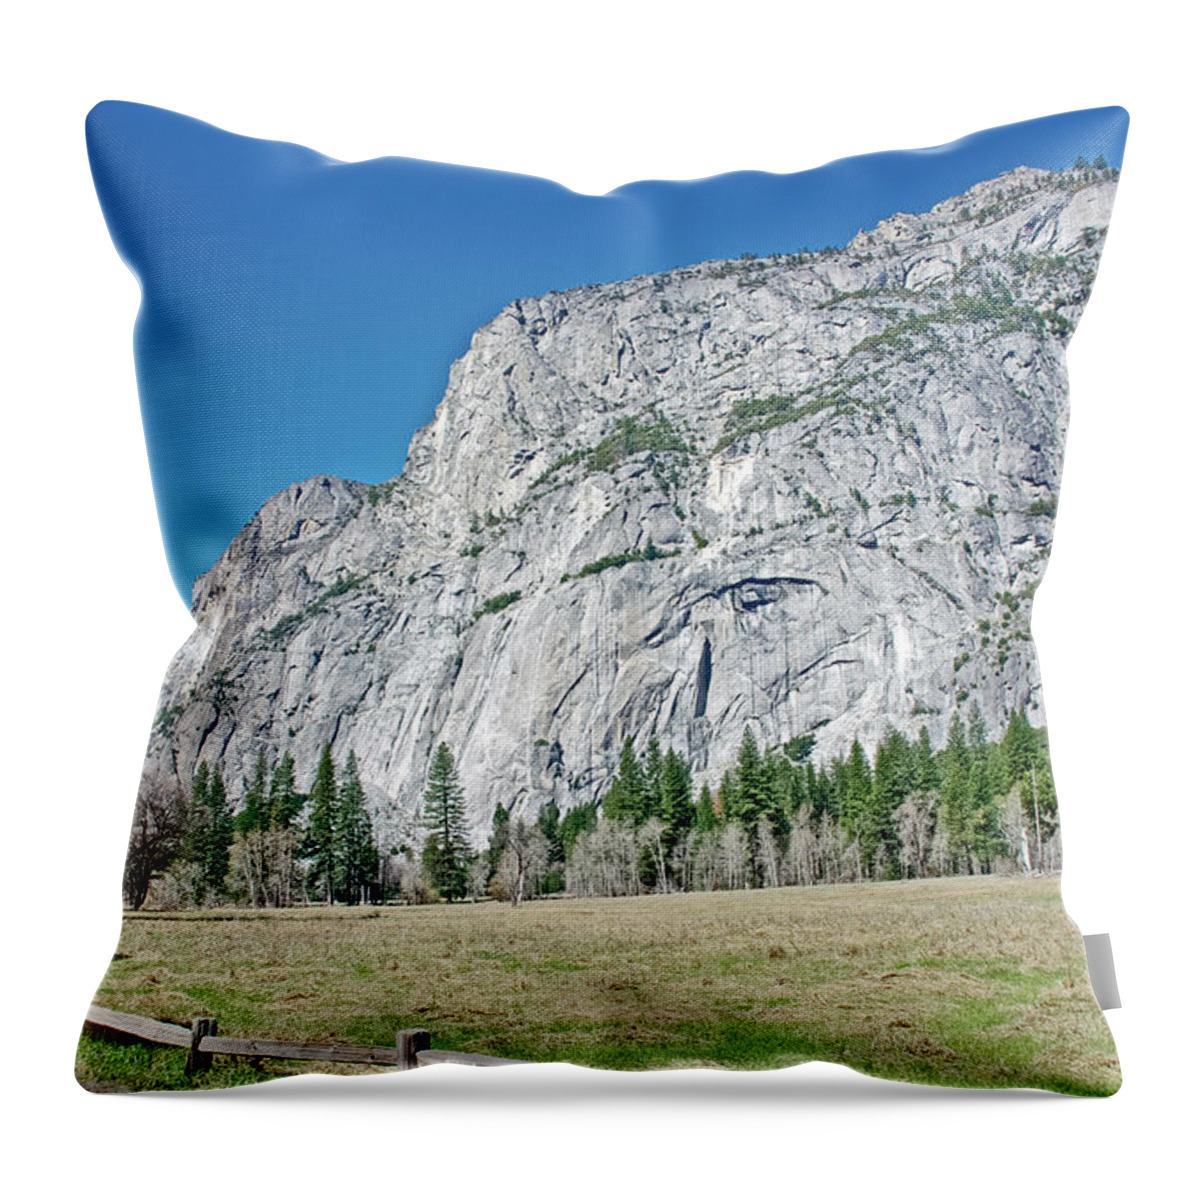  El Capitan In Yosemite National Park Throw Pillow featuring the photograph El Capitan in Yosemite National Park, California by Ruth Hager